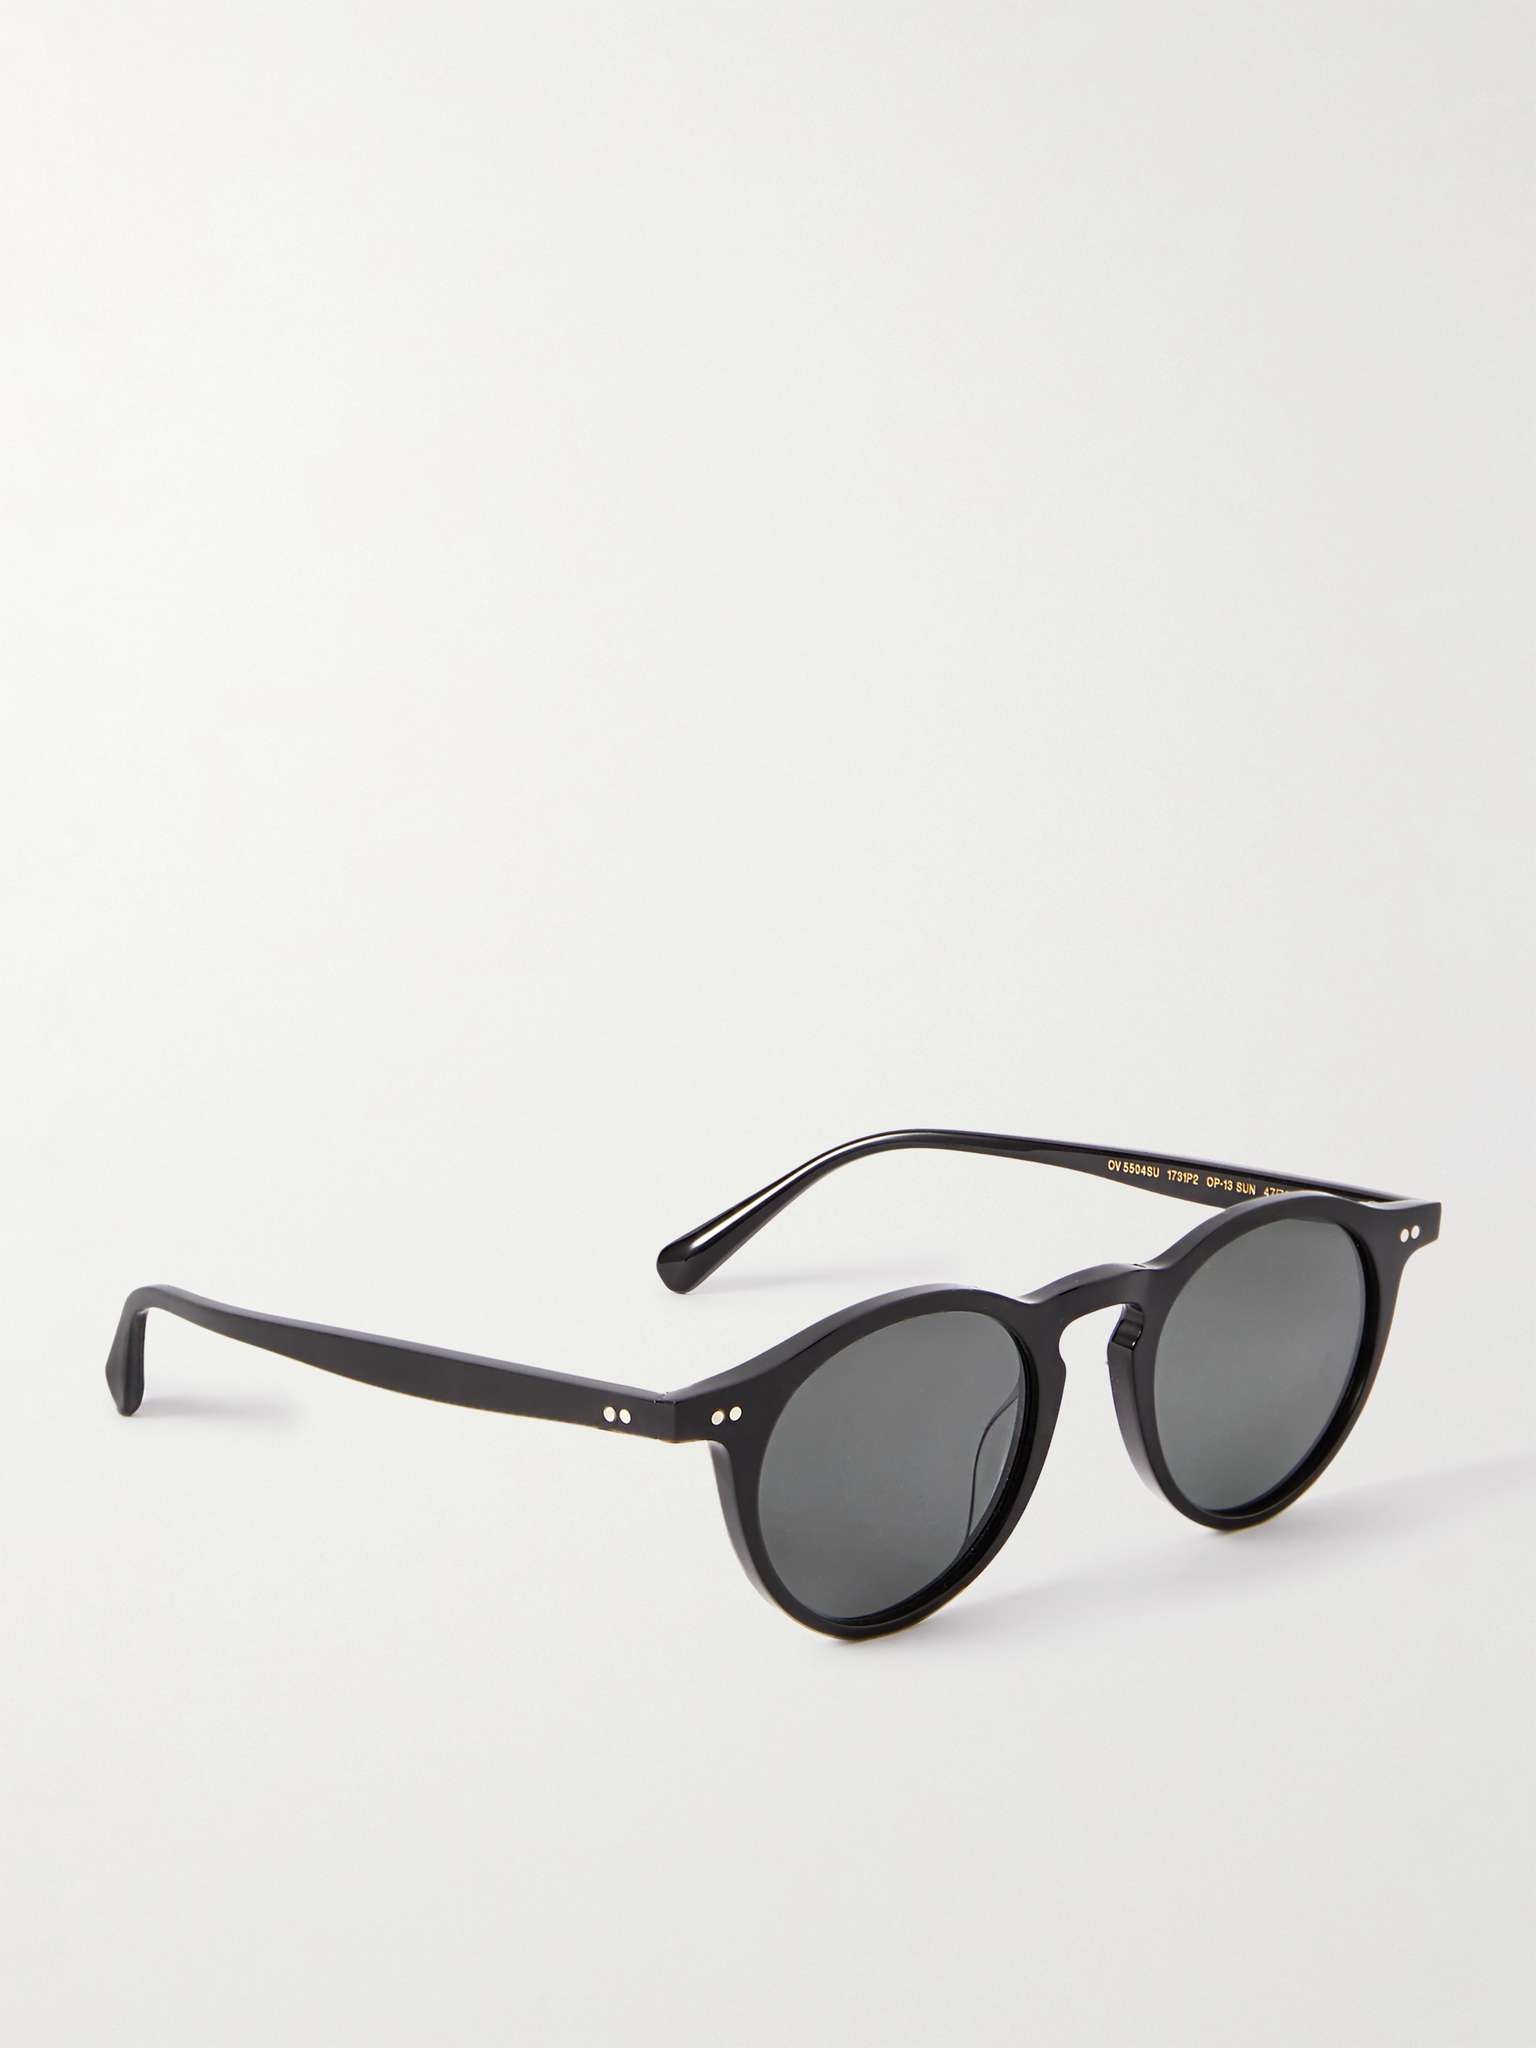 OP-13 Round-Frame Tortoiseshell Acetate Sunglasses - 2